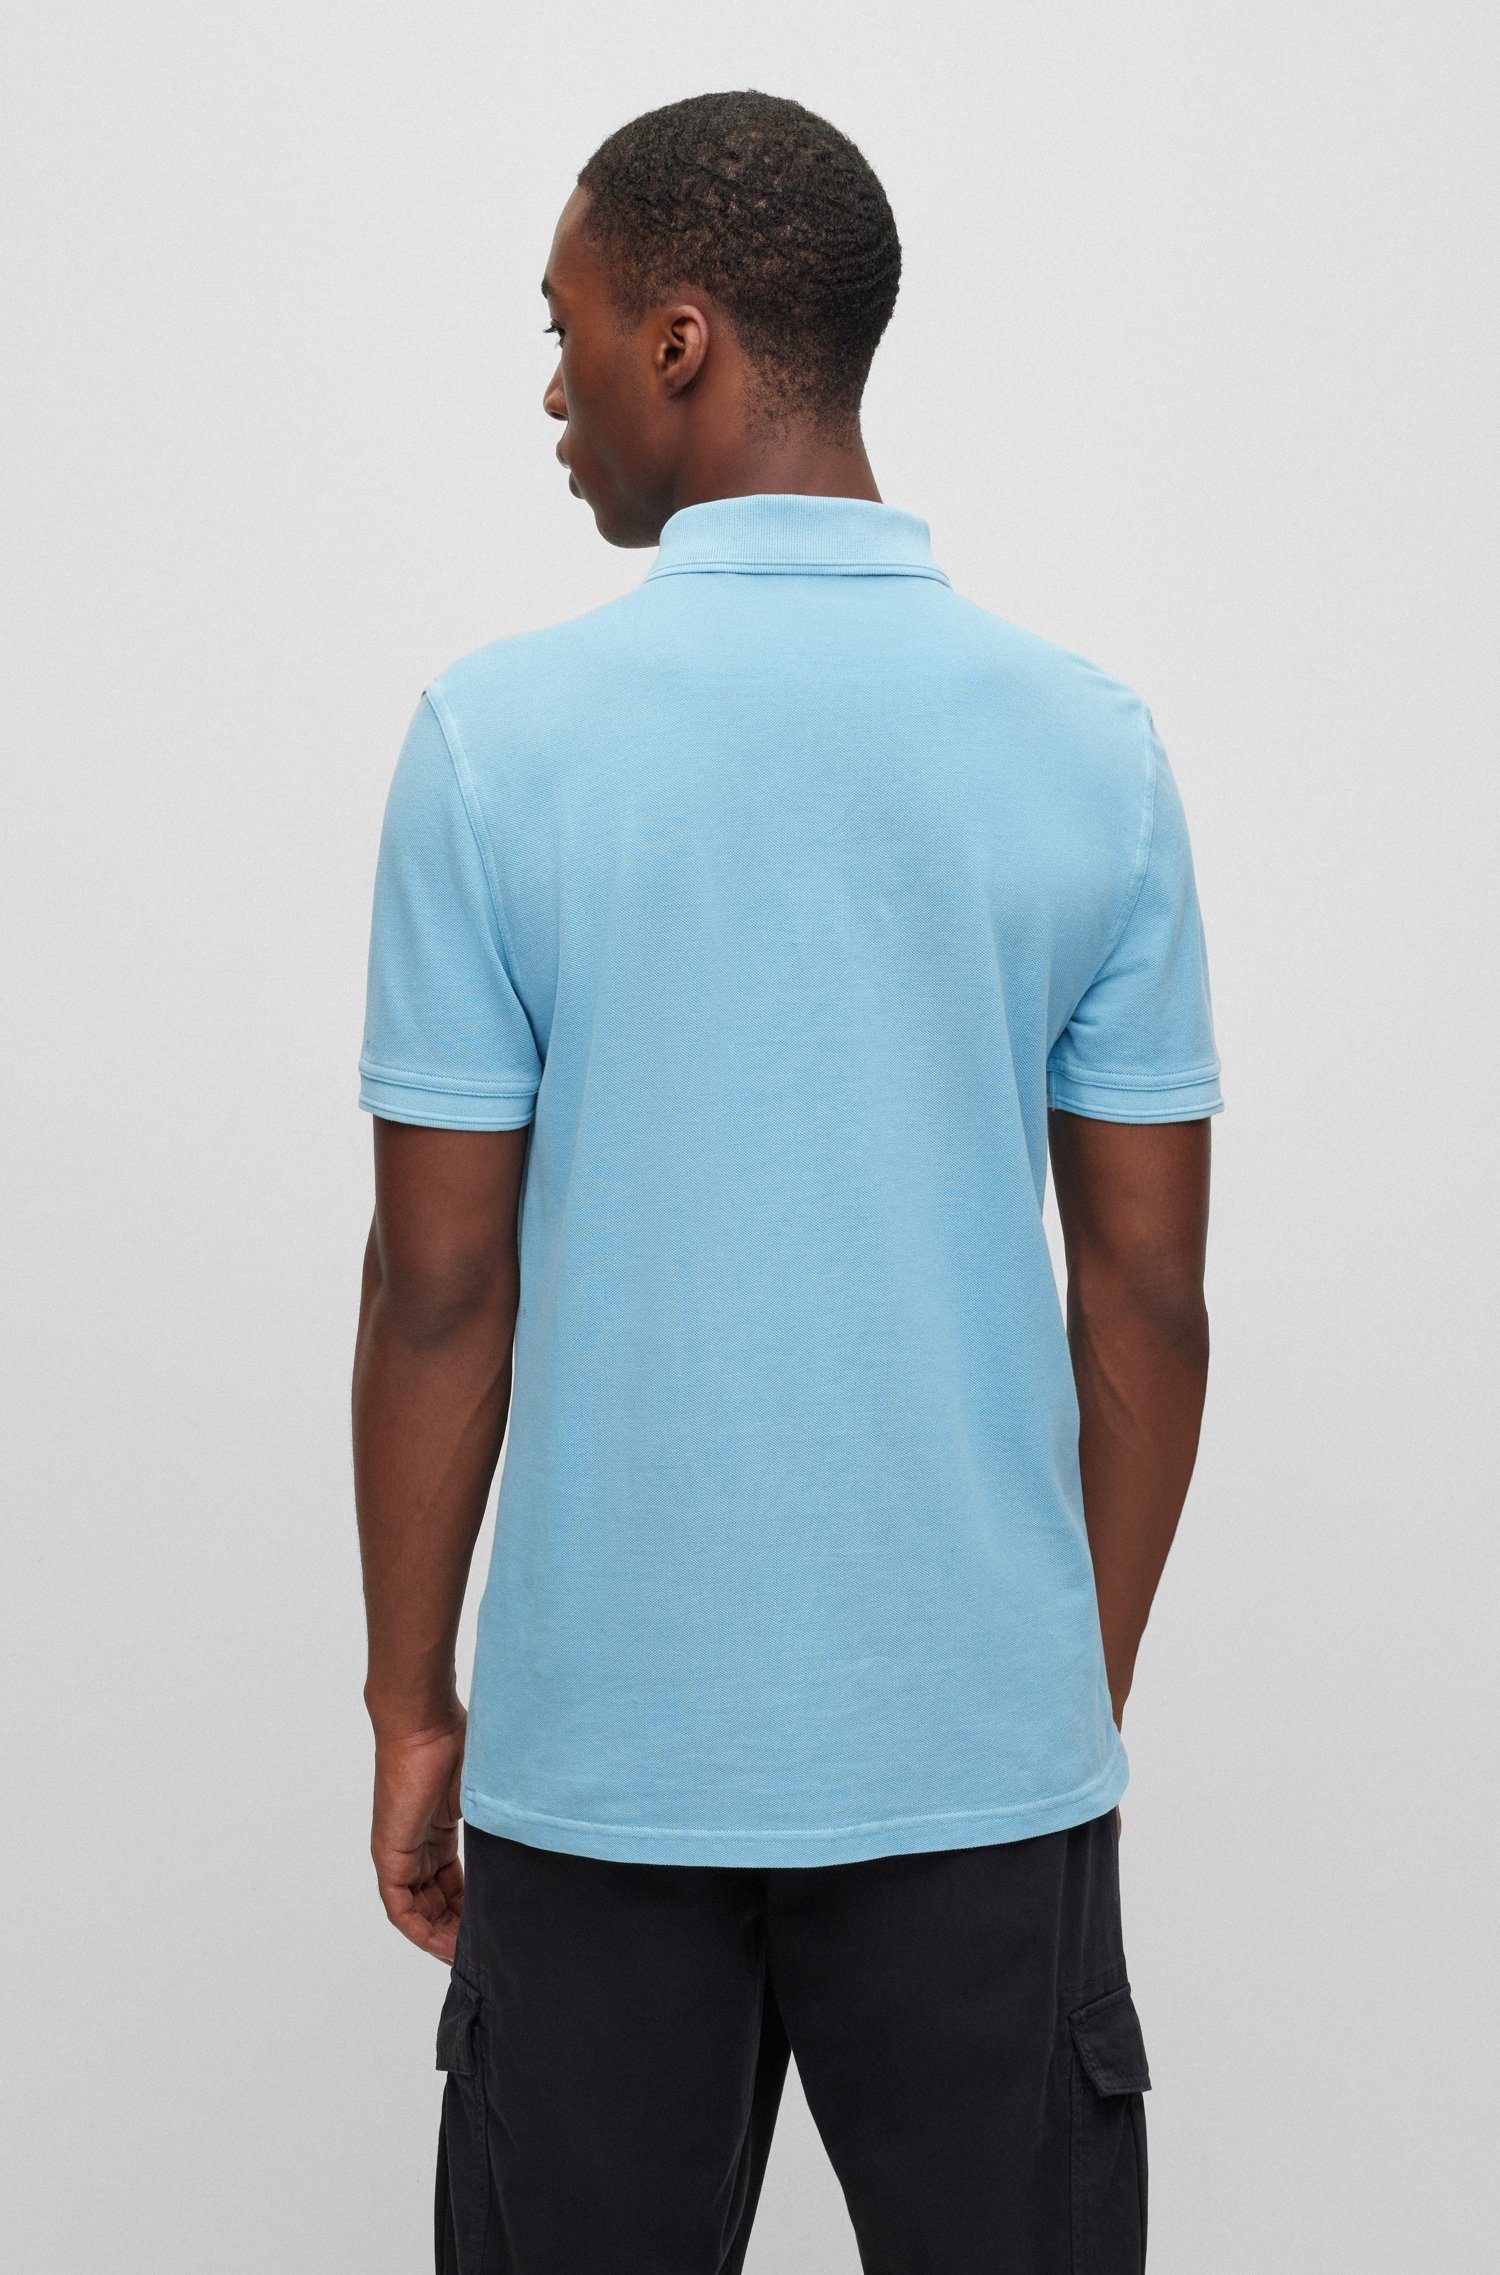 BOSS ORANGE Brust Poloshirt Logoschriftzug 01 mit auf Blue2 dezentem 10203439 Open der Prime